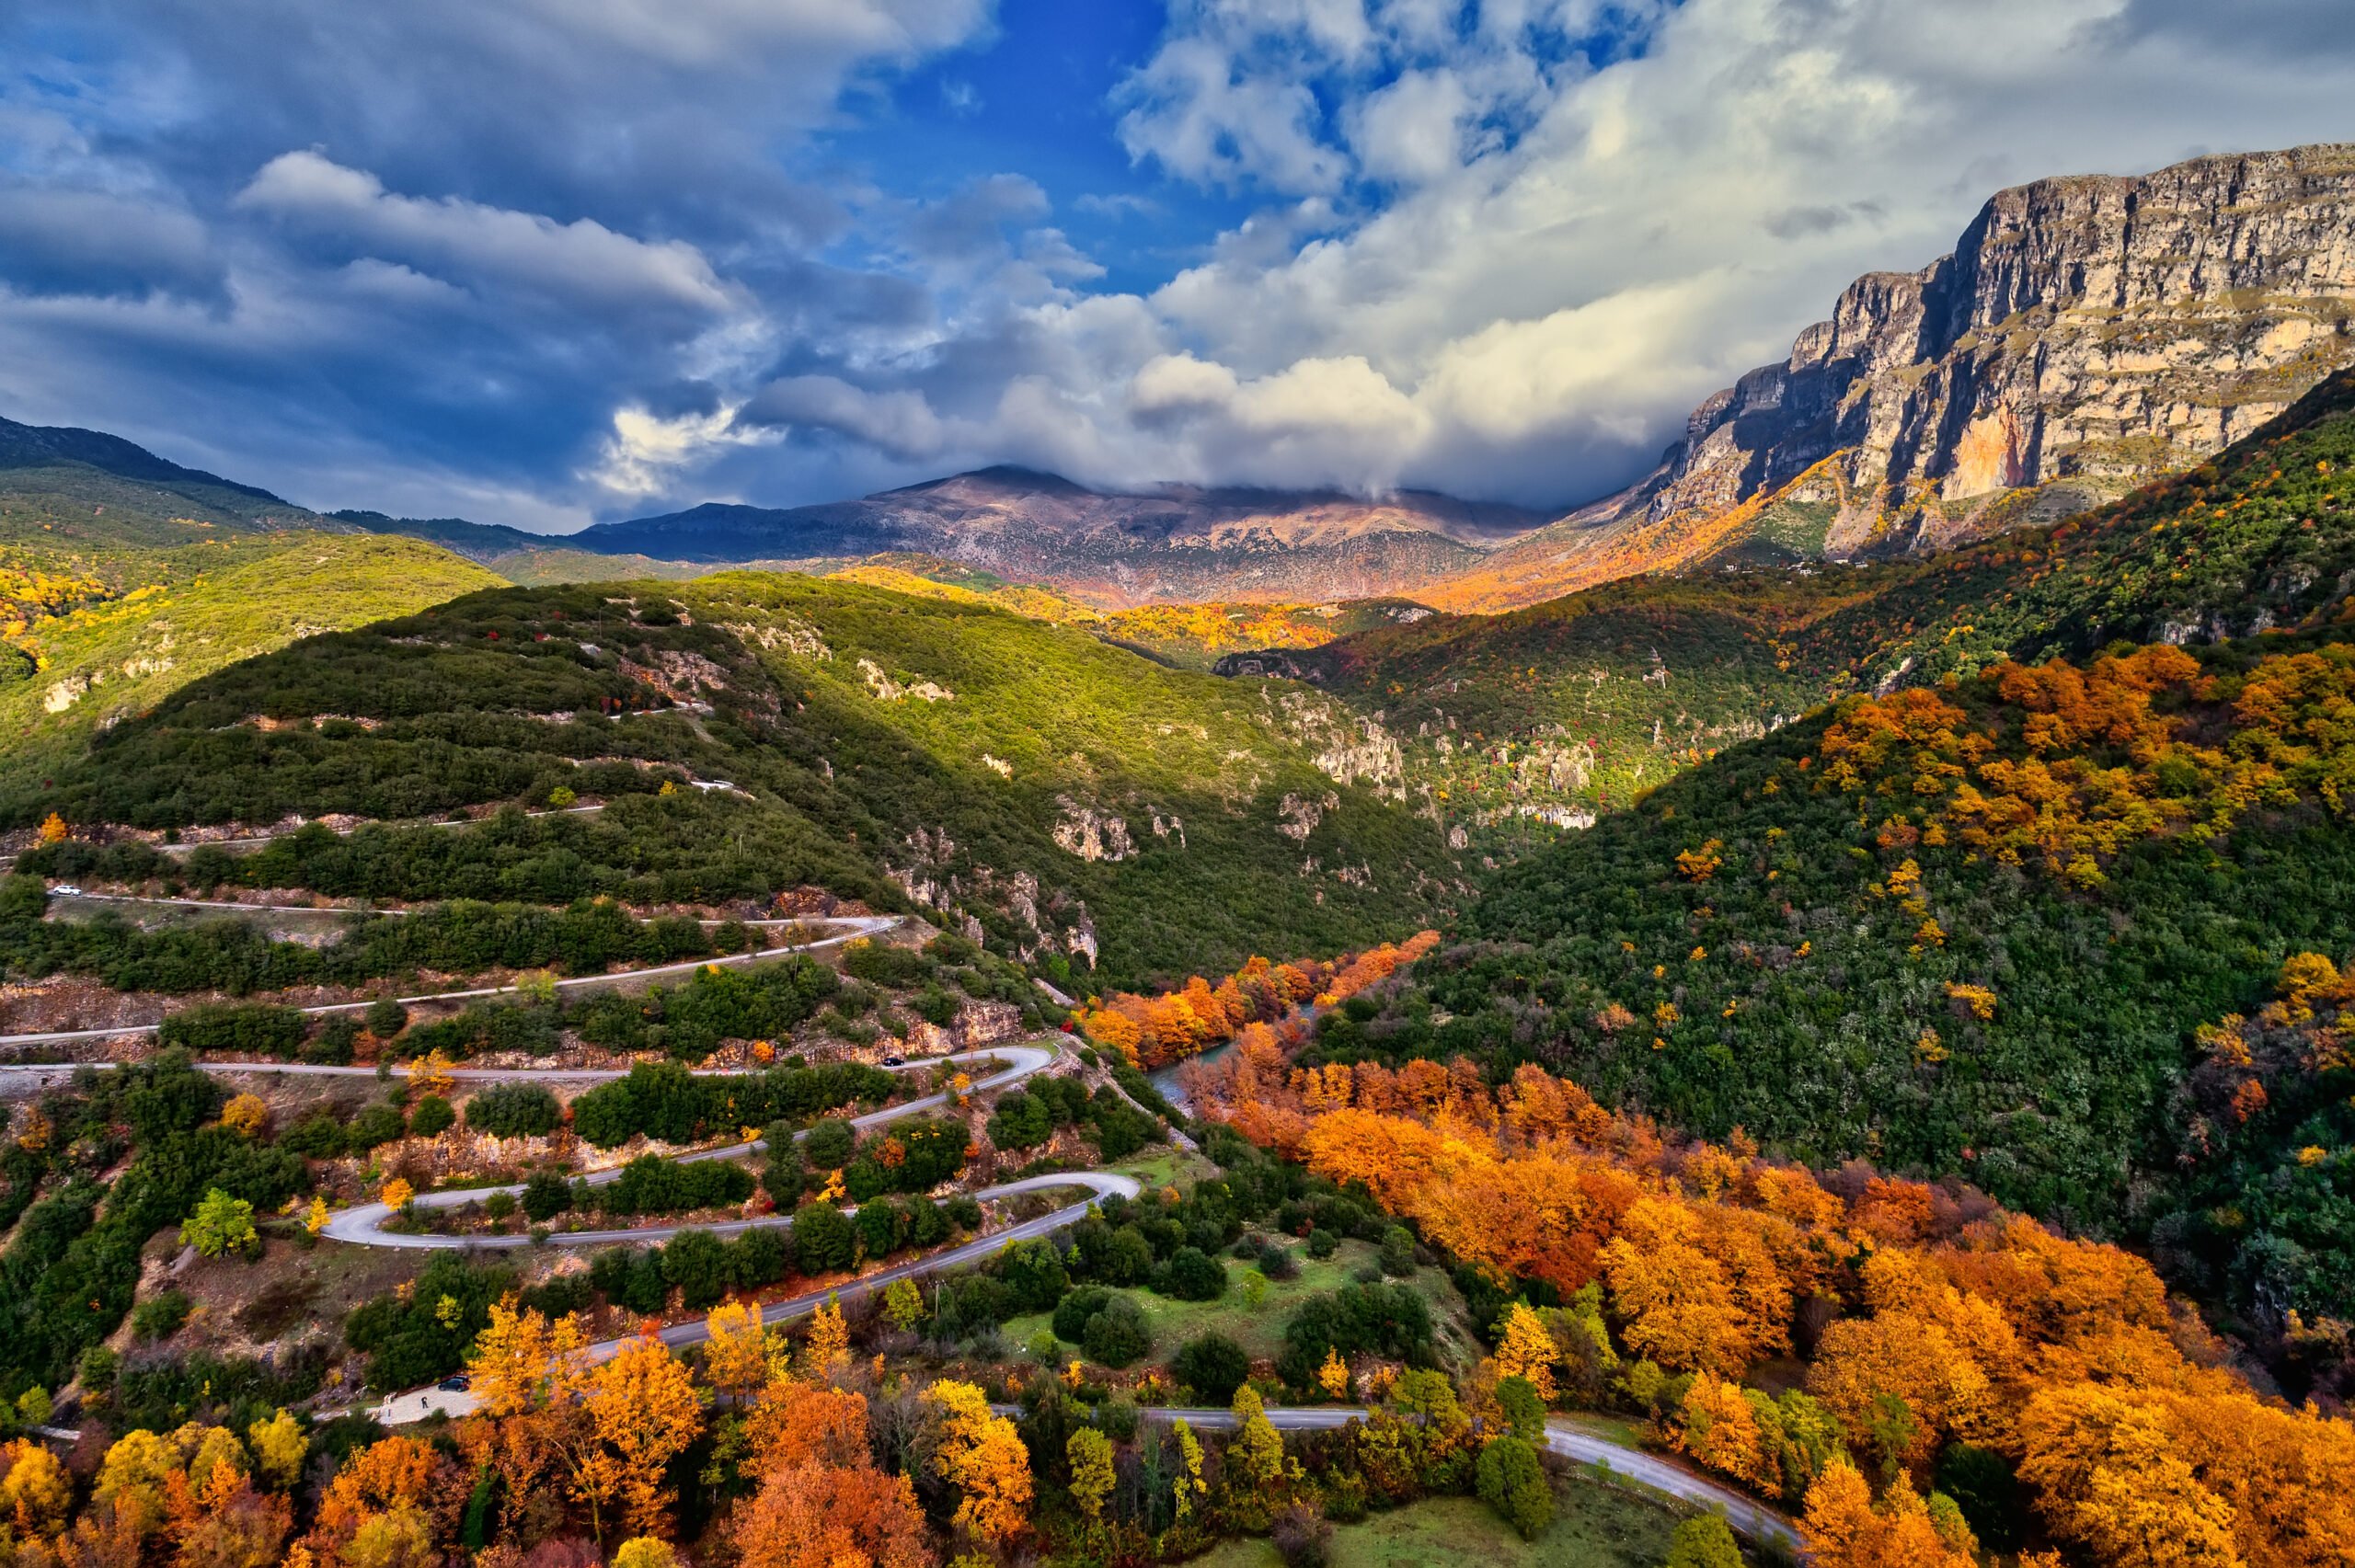 Marvel The Extraordinary Nature On The Vikos Gorge Hiking Tour From Monodendri Village - Ioannina